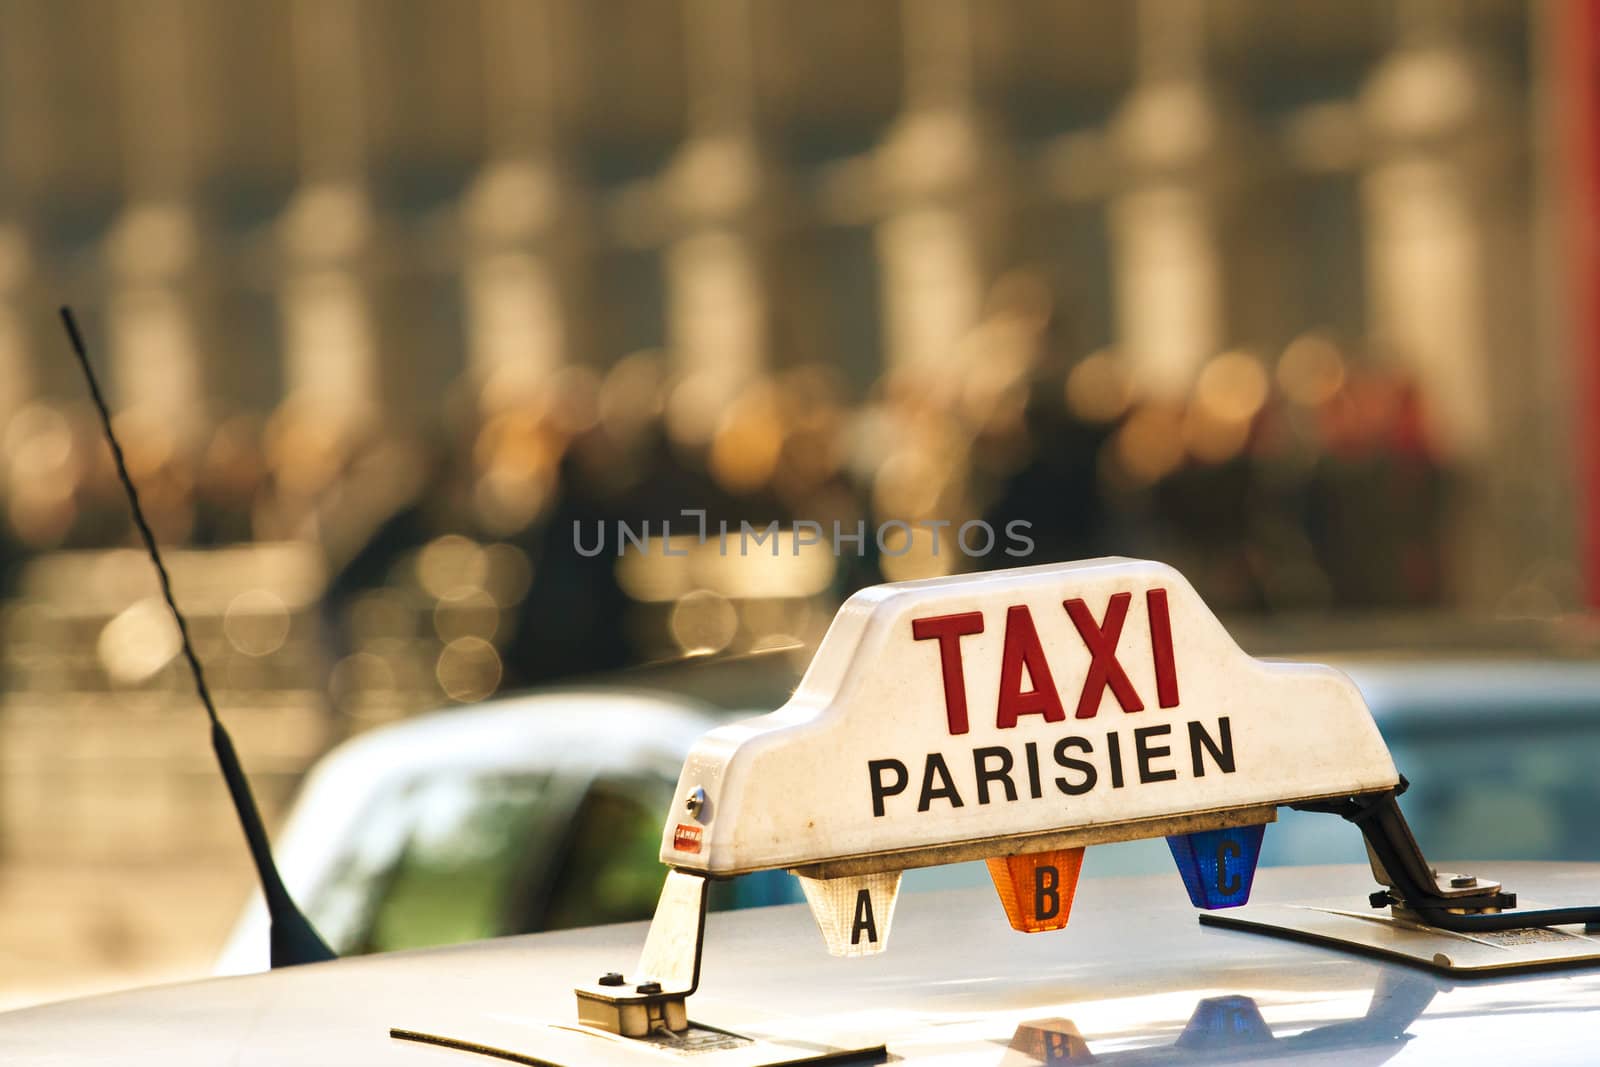 Taxi Parisien horizontal shot by Lamarinx